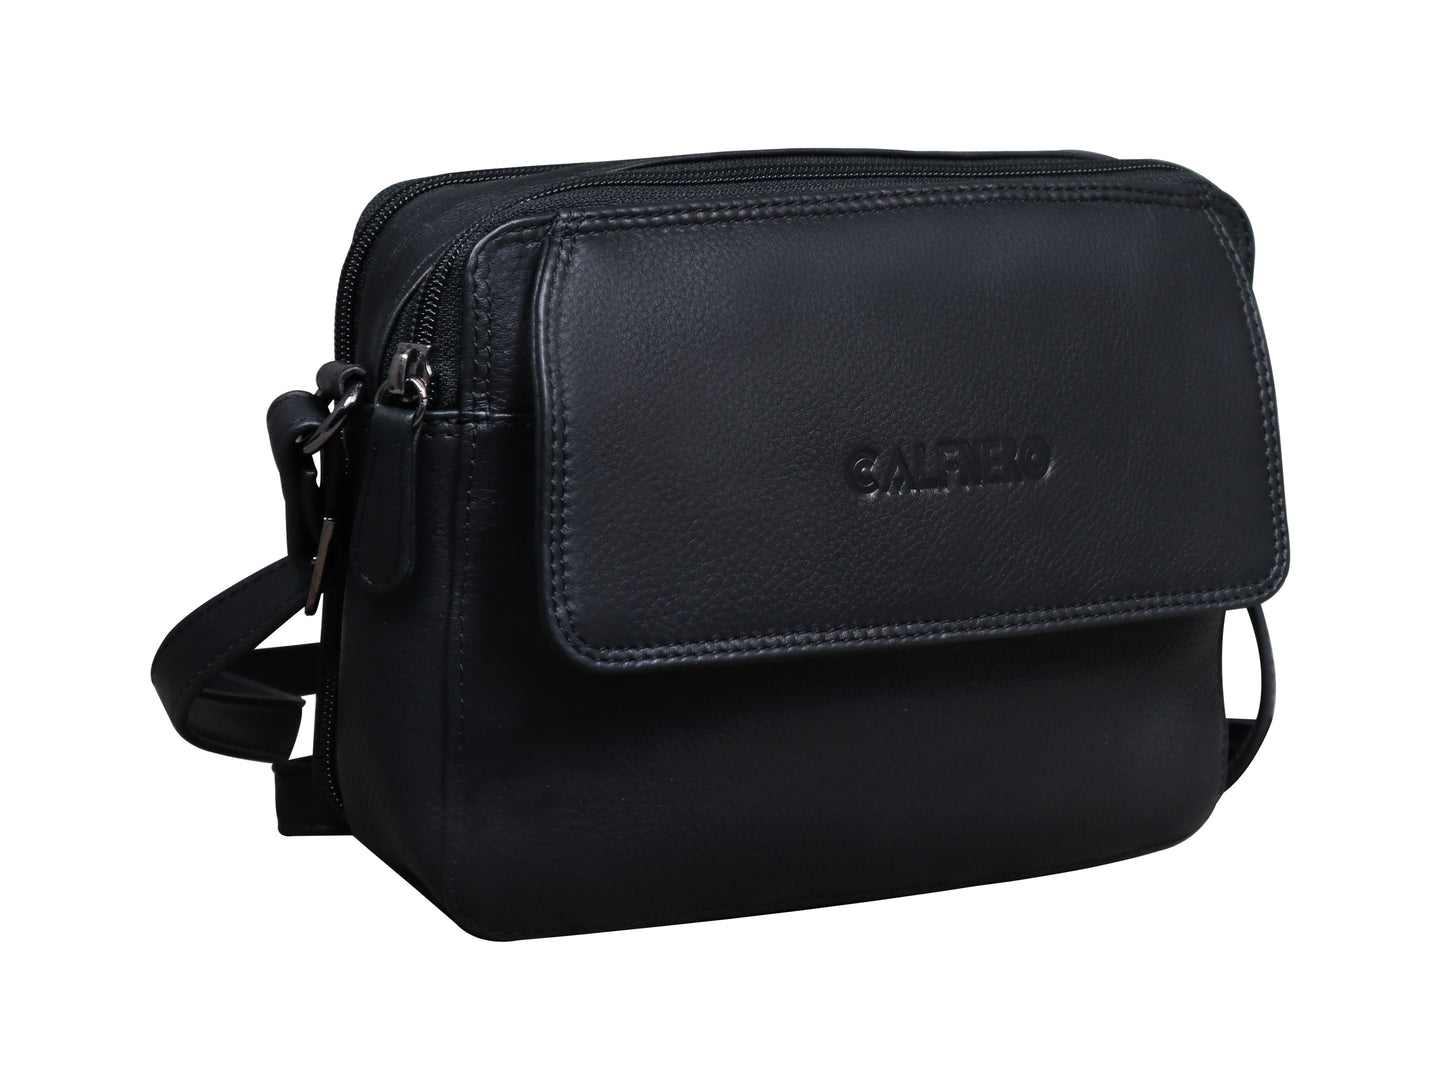 Calfnero Genuine Leather Women's Sling Bag (80056-Black)